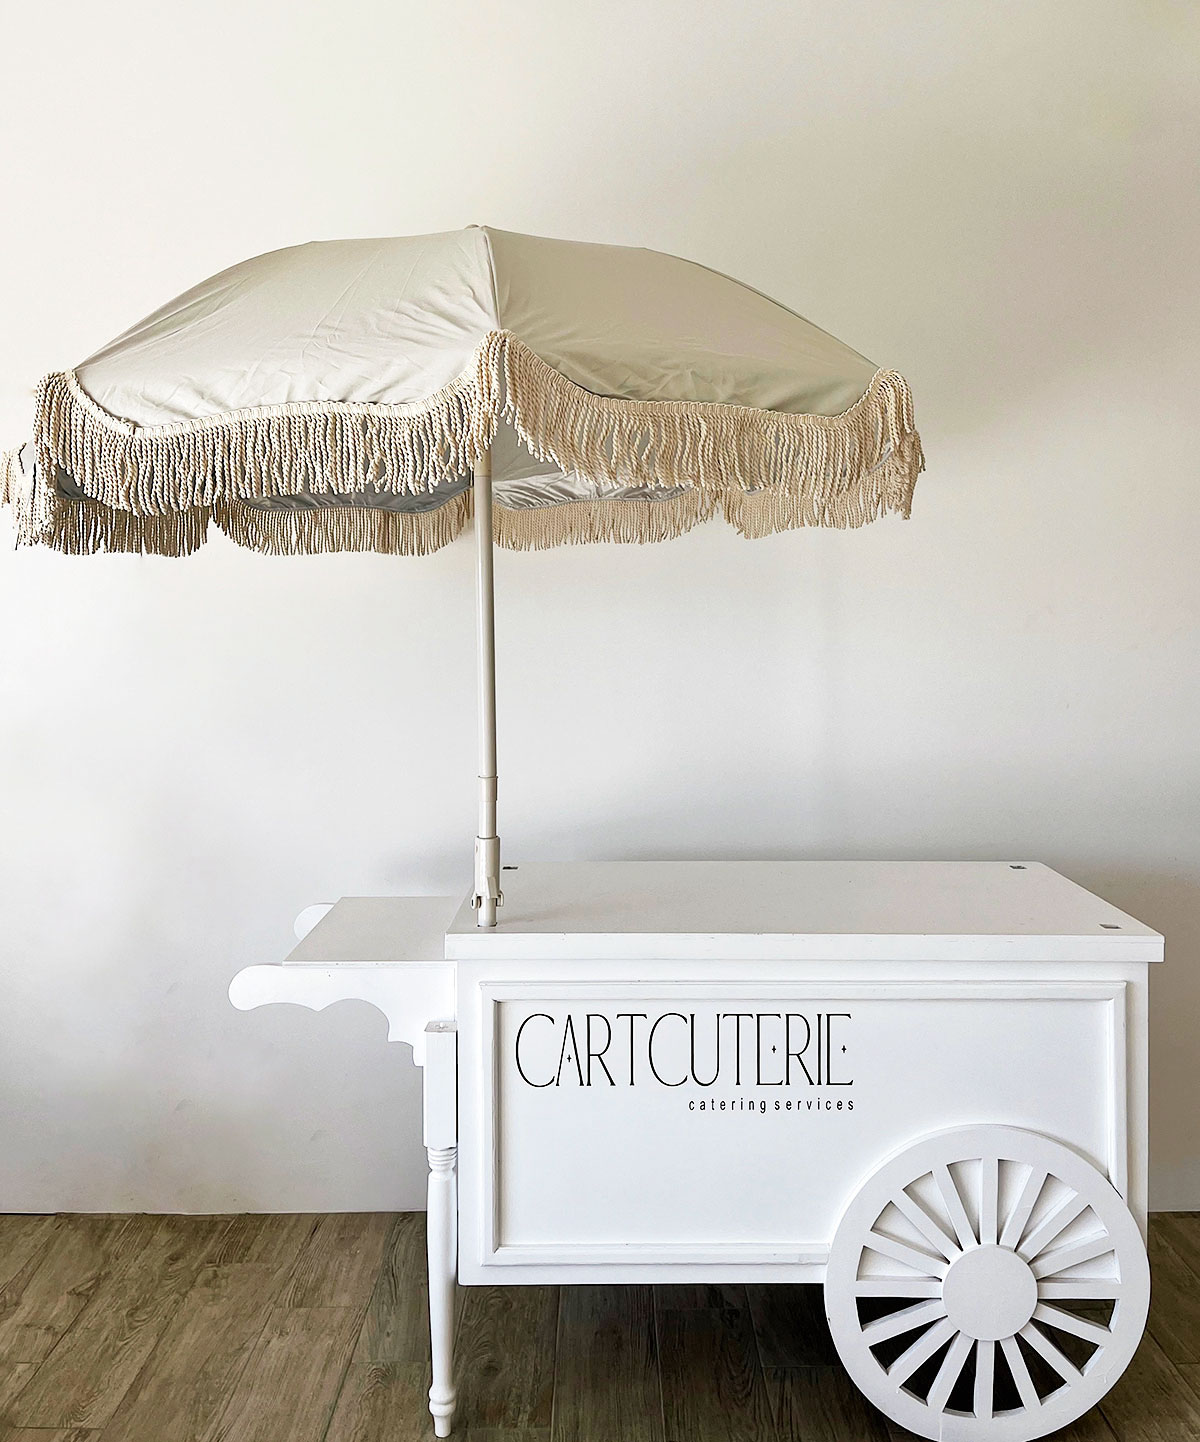 umbrella top for Cartcuterie party cart rental